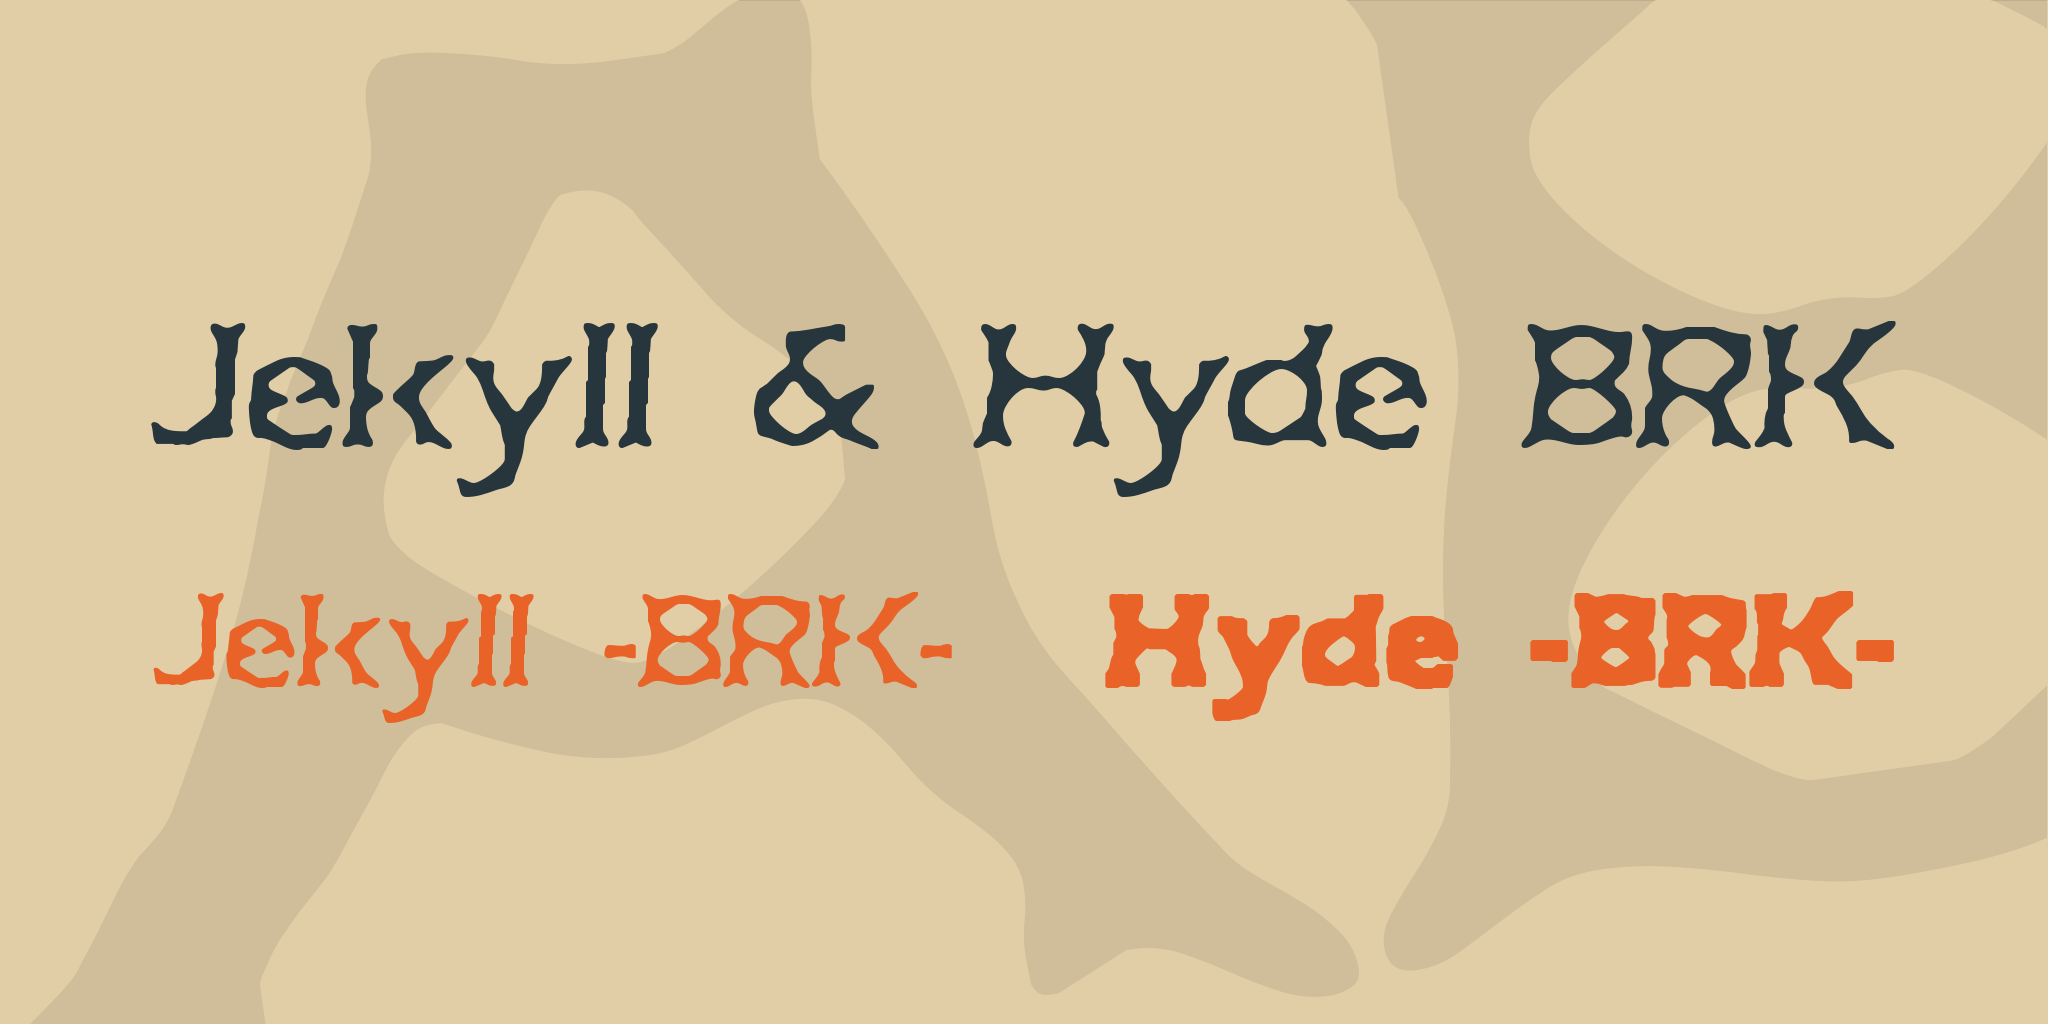 Jekyll & Hyde Brk